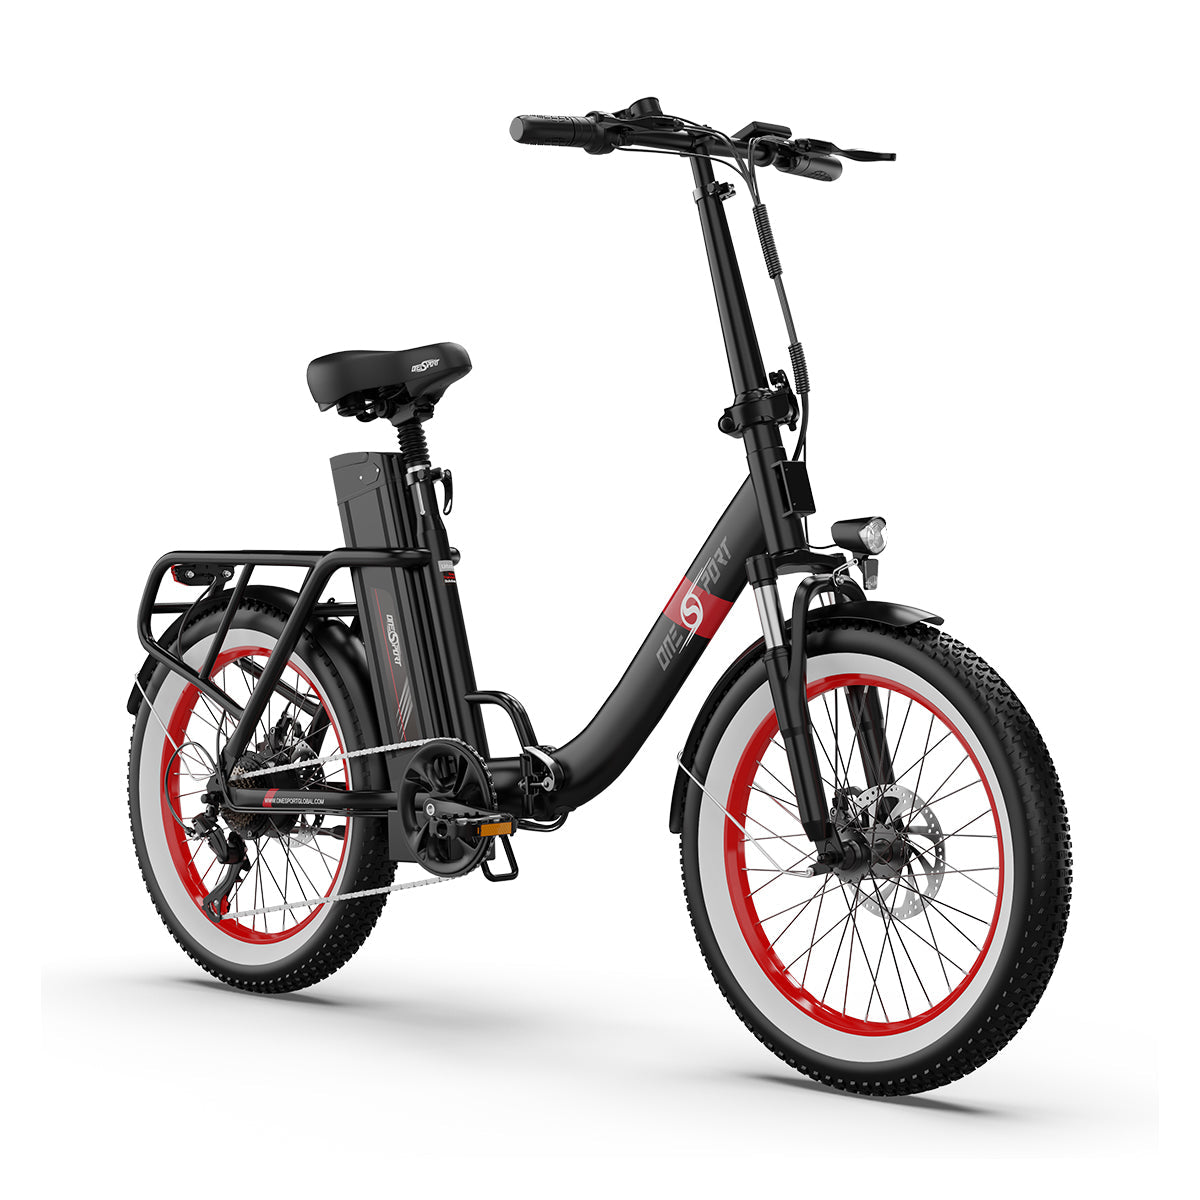 OneSport OT16-2 Urban Portable Folding Electric Bike